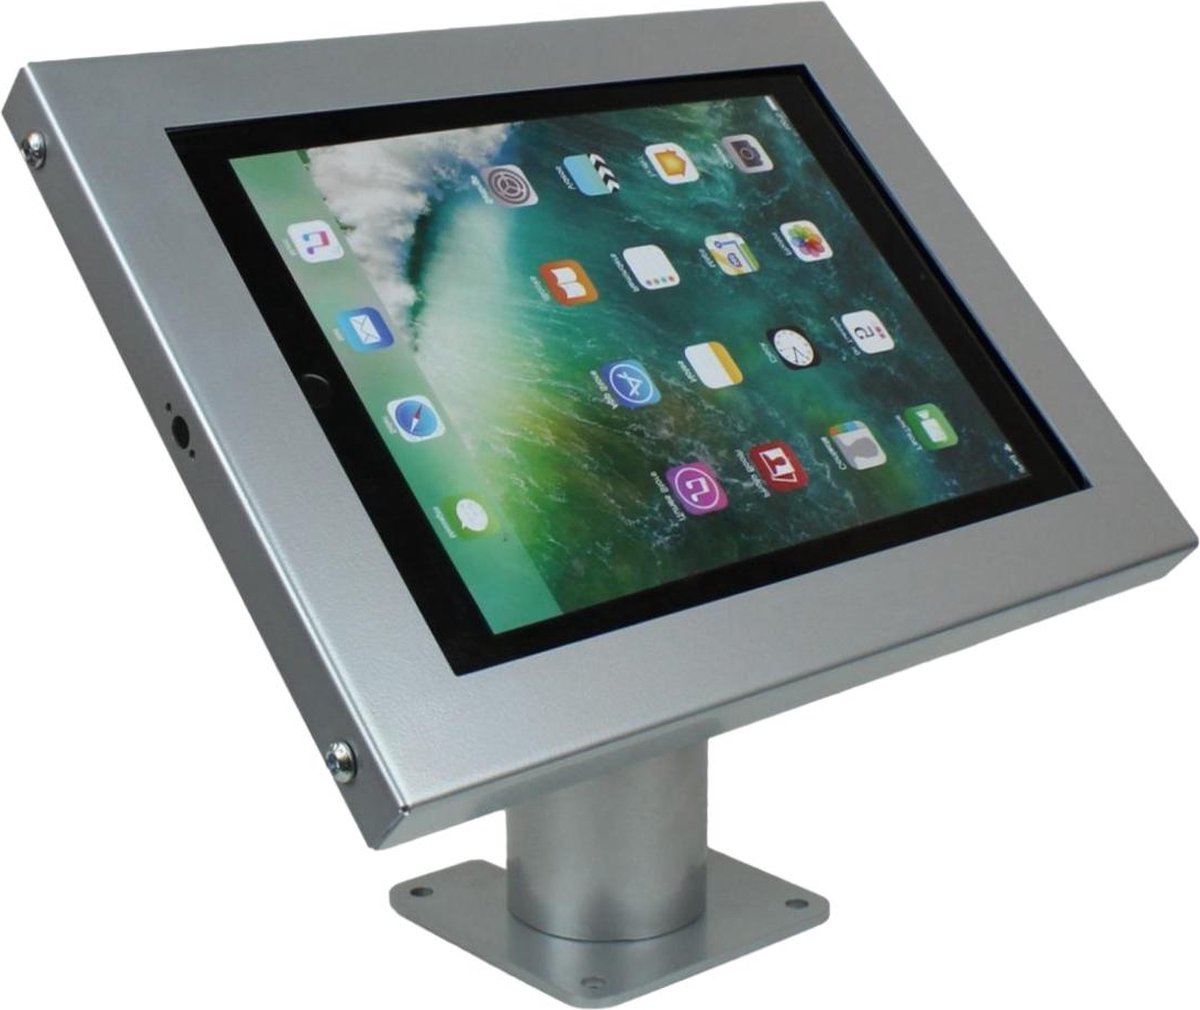 Tablethouder - tabletstandaard - standaard tablet - ipad houder - tablet tafelstandaard - houder voor tablet - voor tablets tussen 7-8 inch - grijs